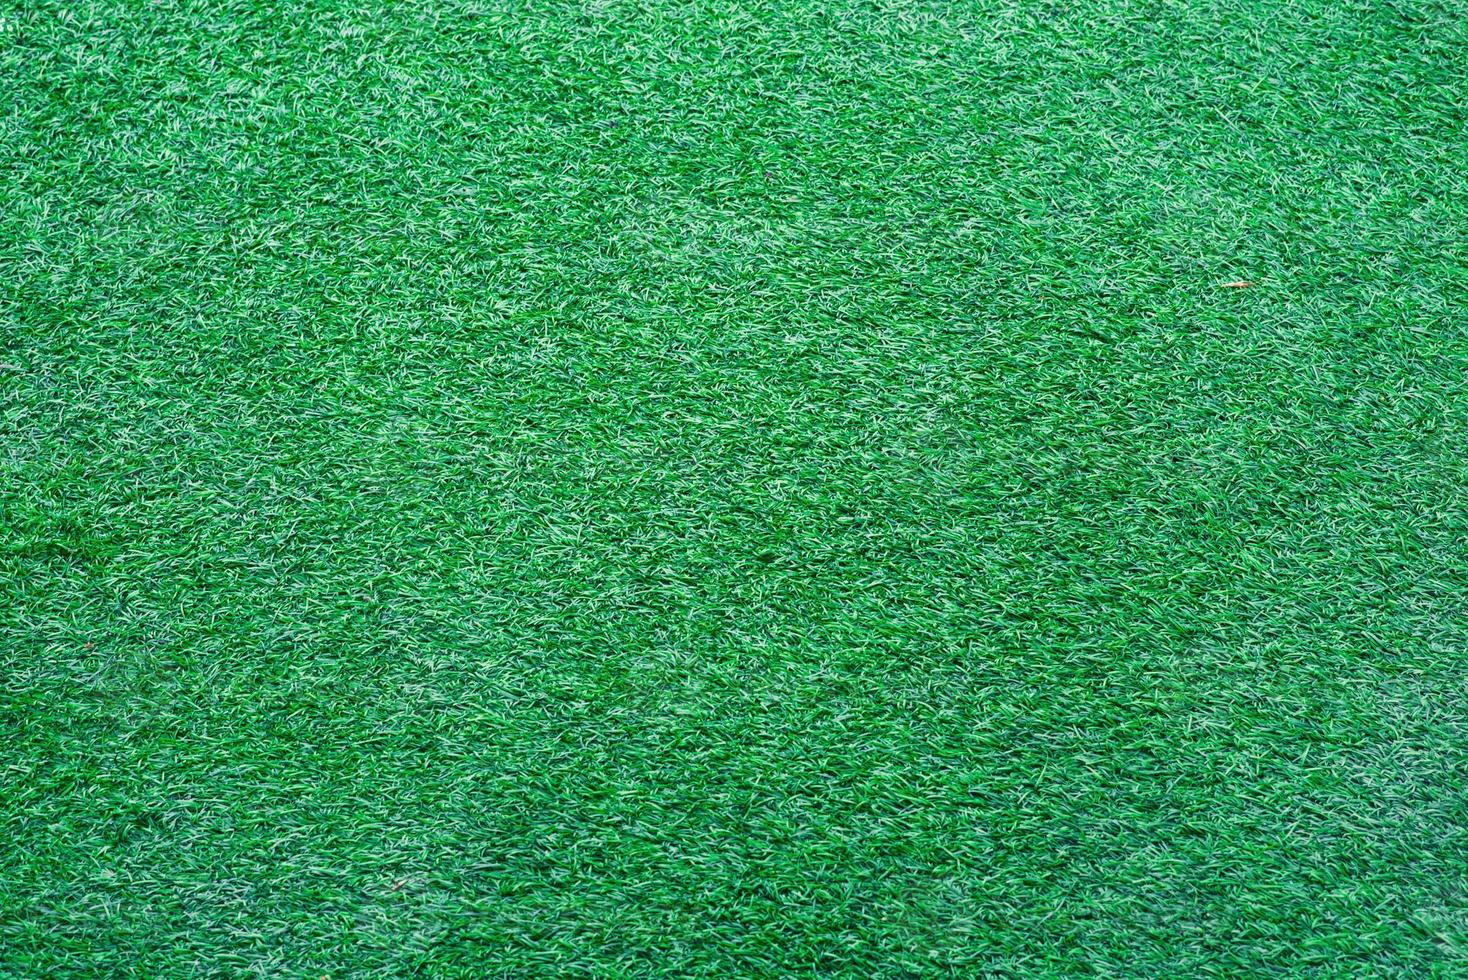 verde erba struttura e superficie foto